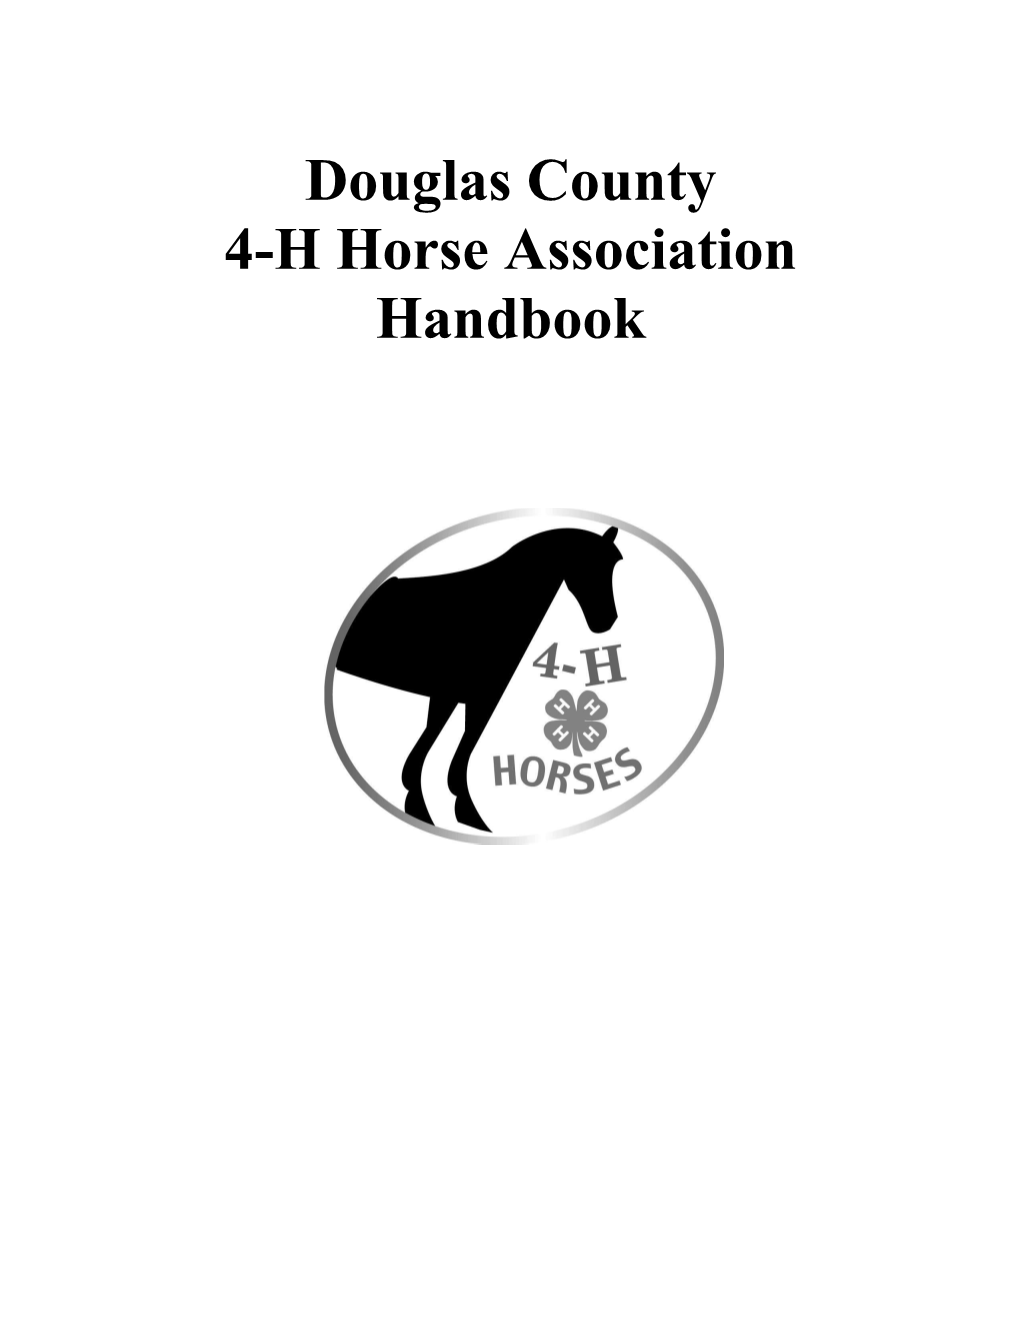 4-H Horse Association